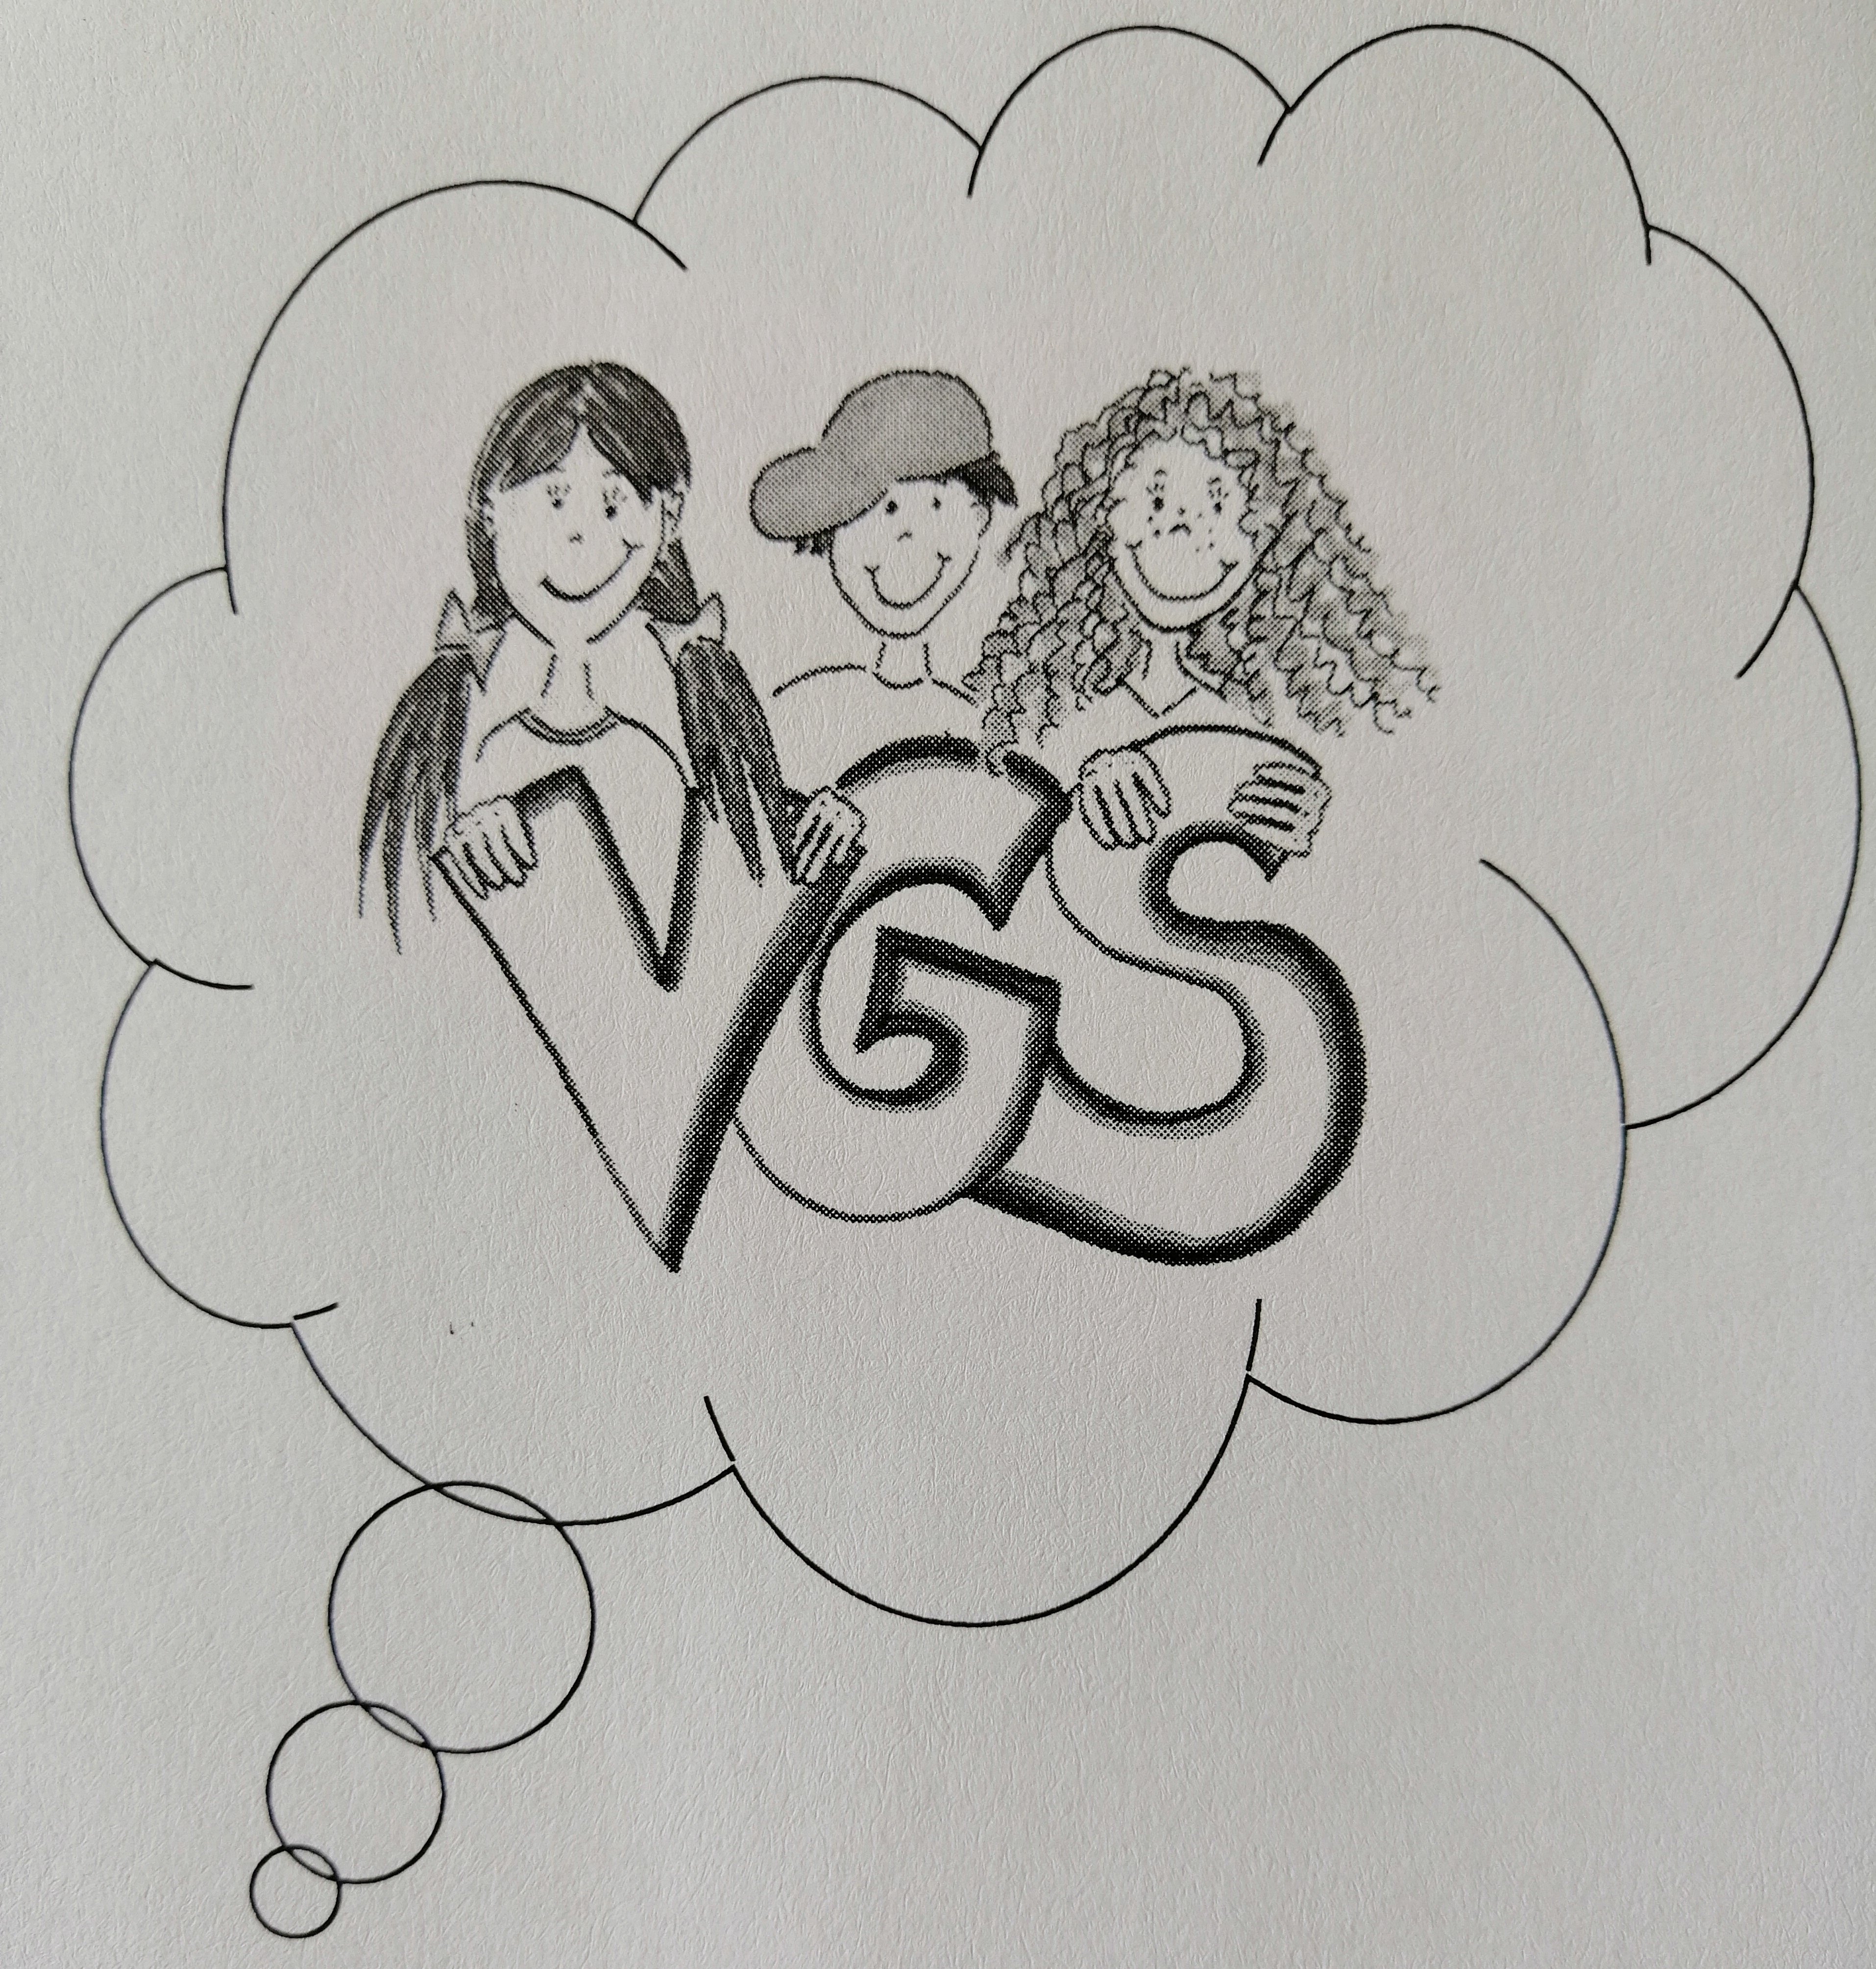  VGS Logo 